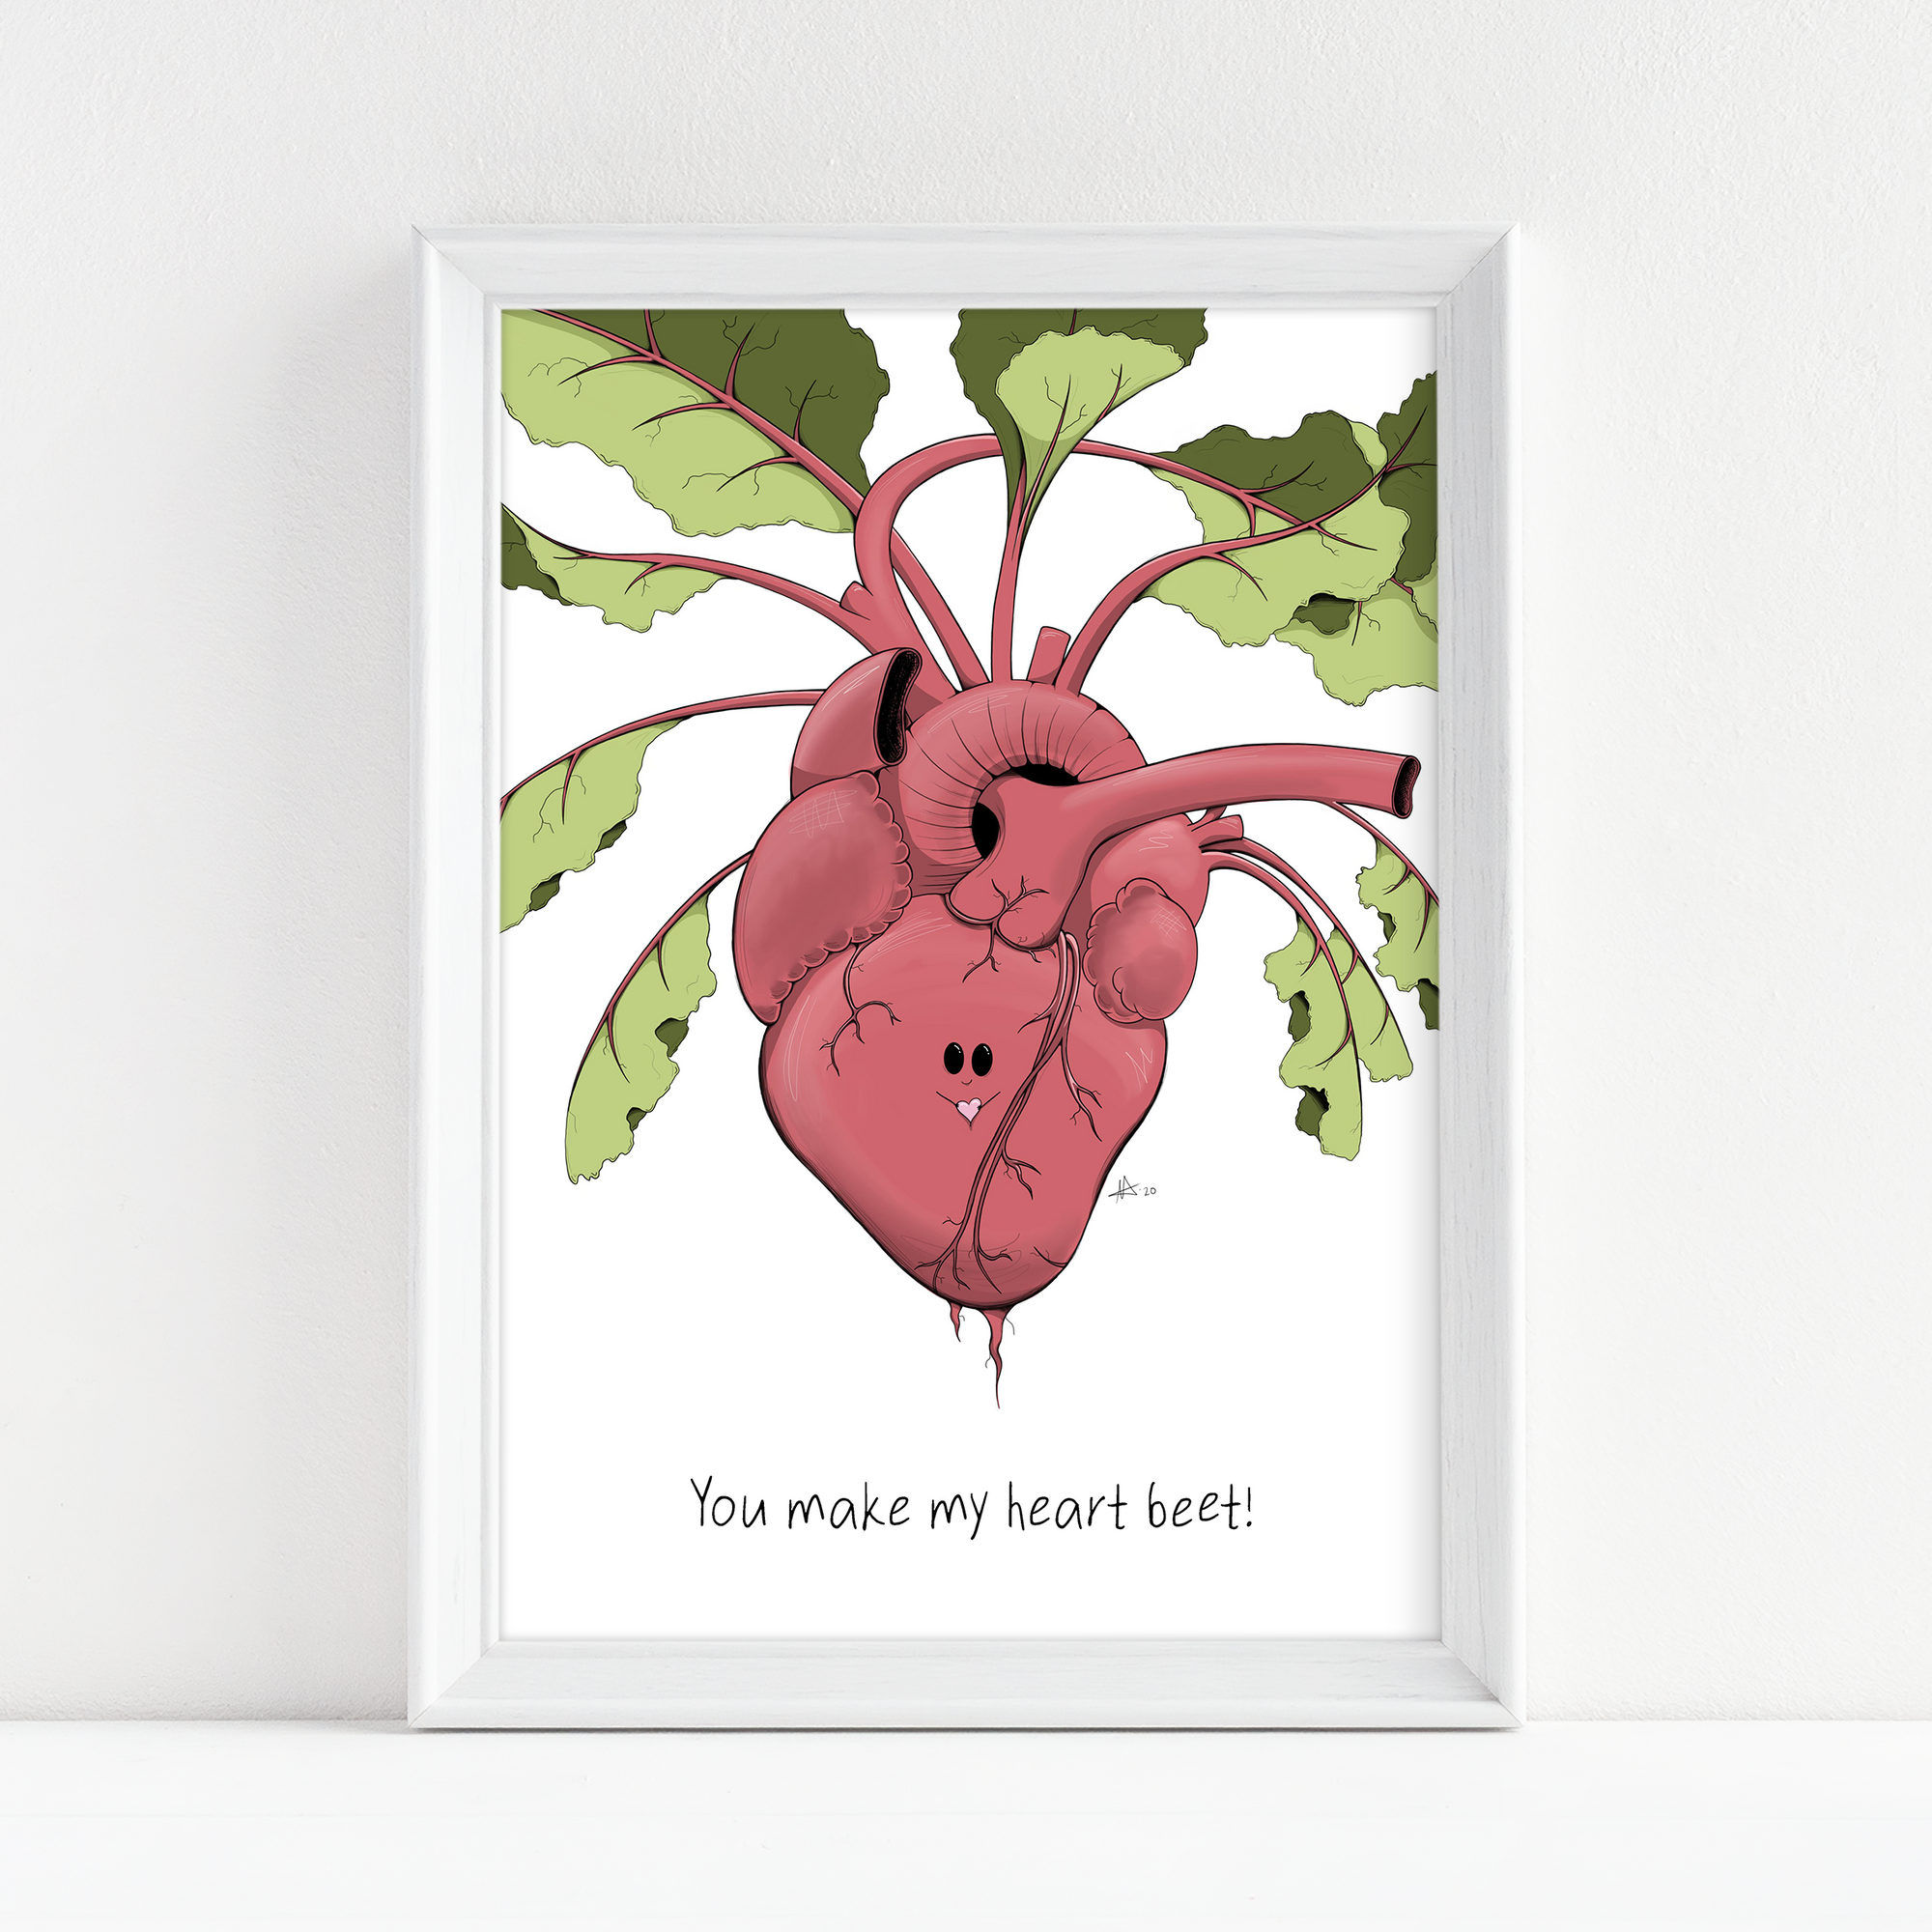 "You make my heart beet!" - Fine Art Print